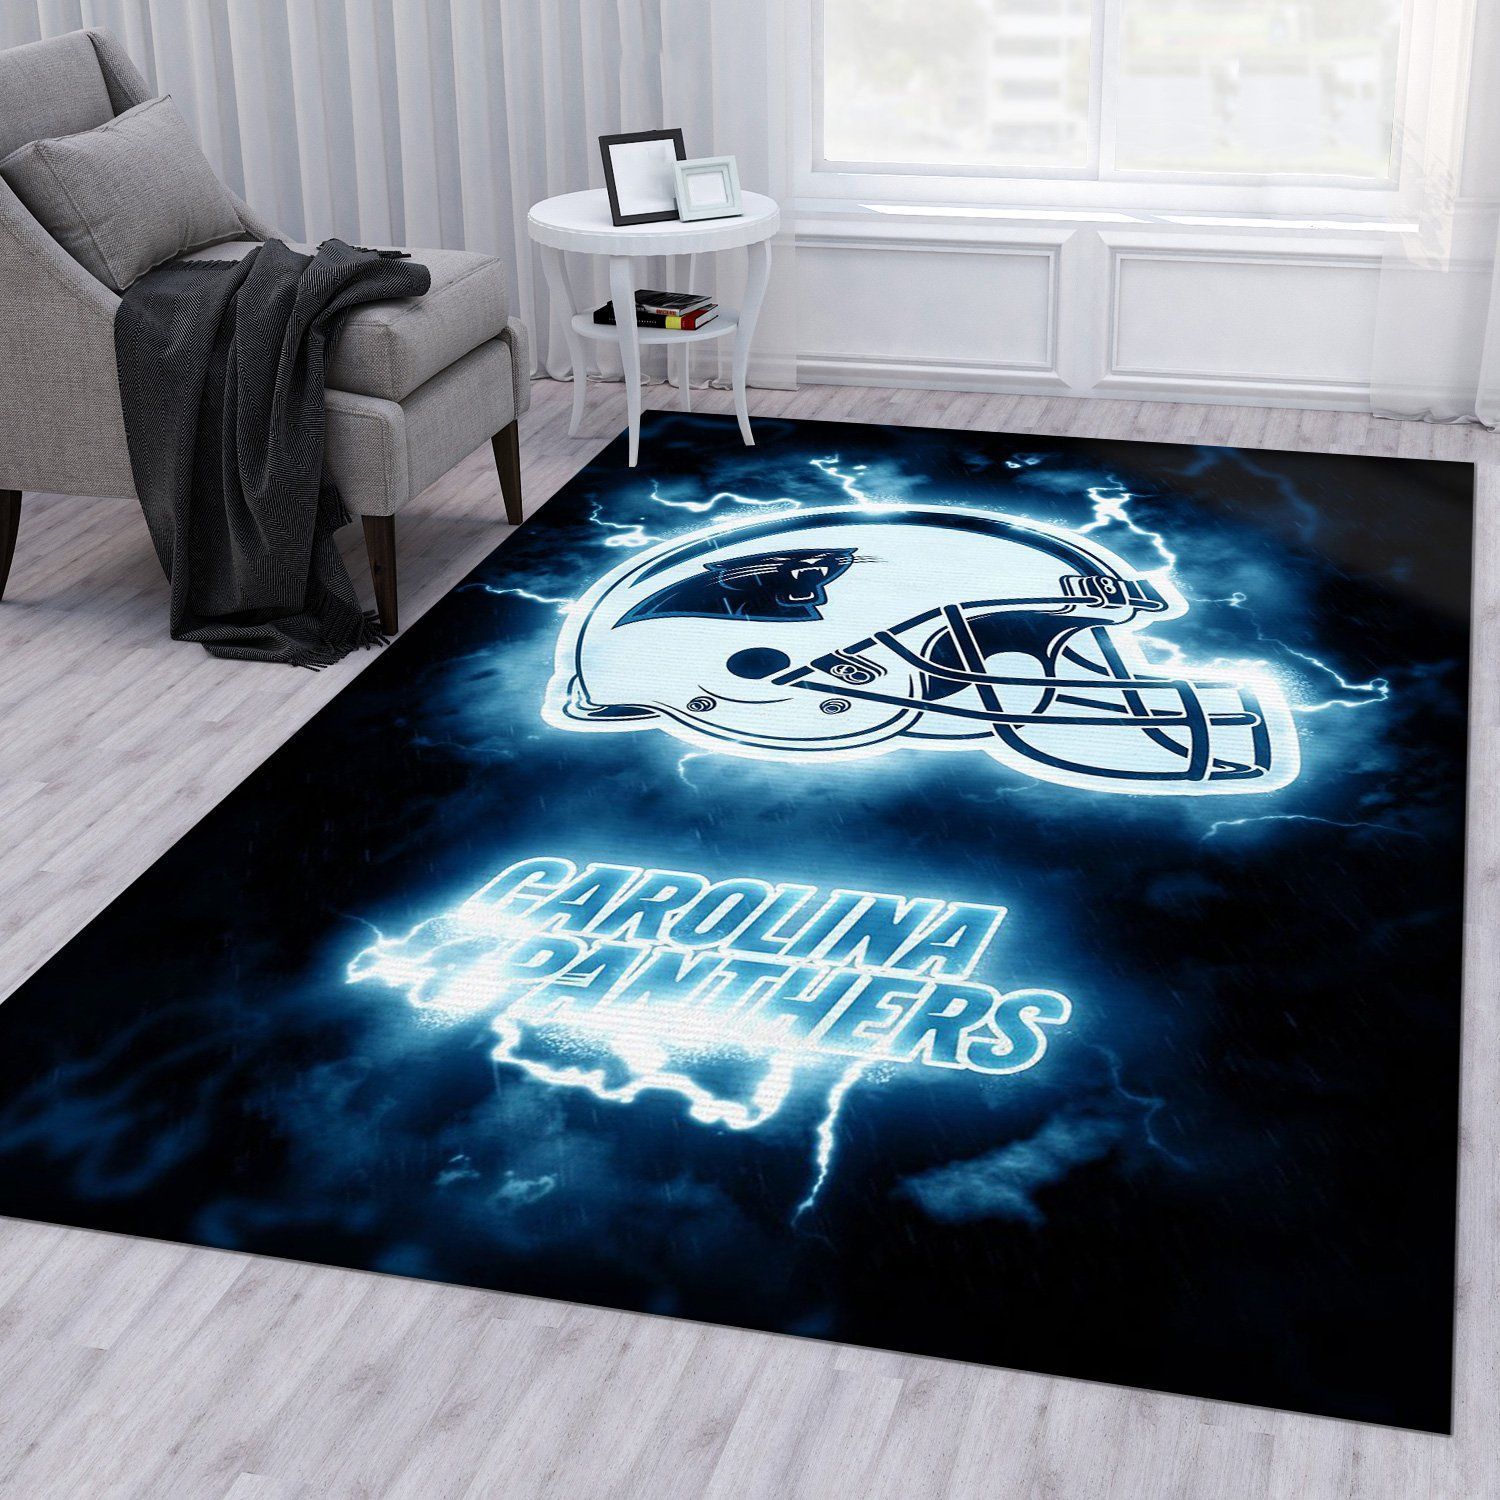 Carolina Panthers NFL Rug Bedroom Rug Home Decor Floor Decor - Indoor Outdoor Rugs